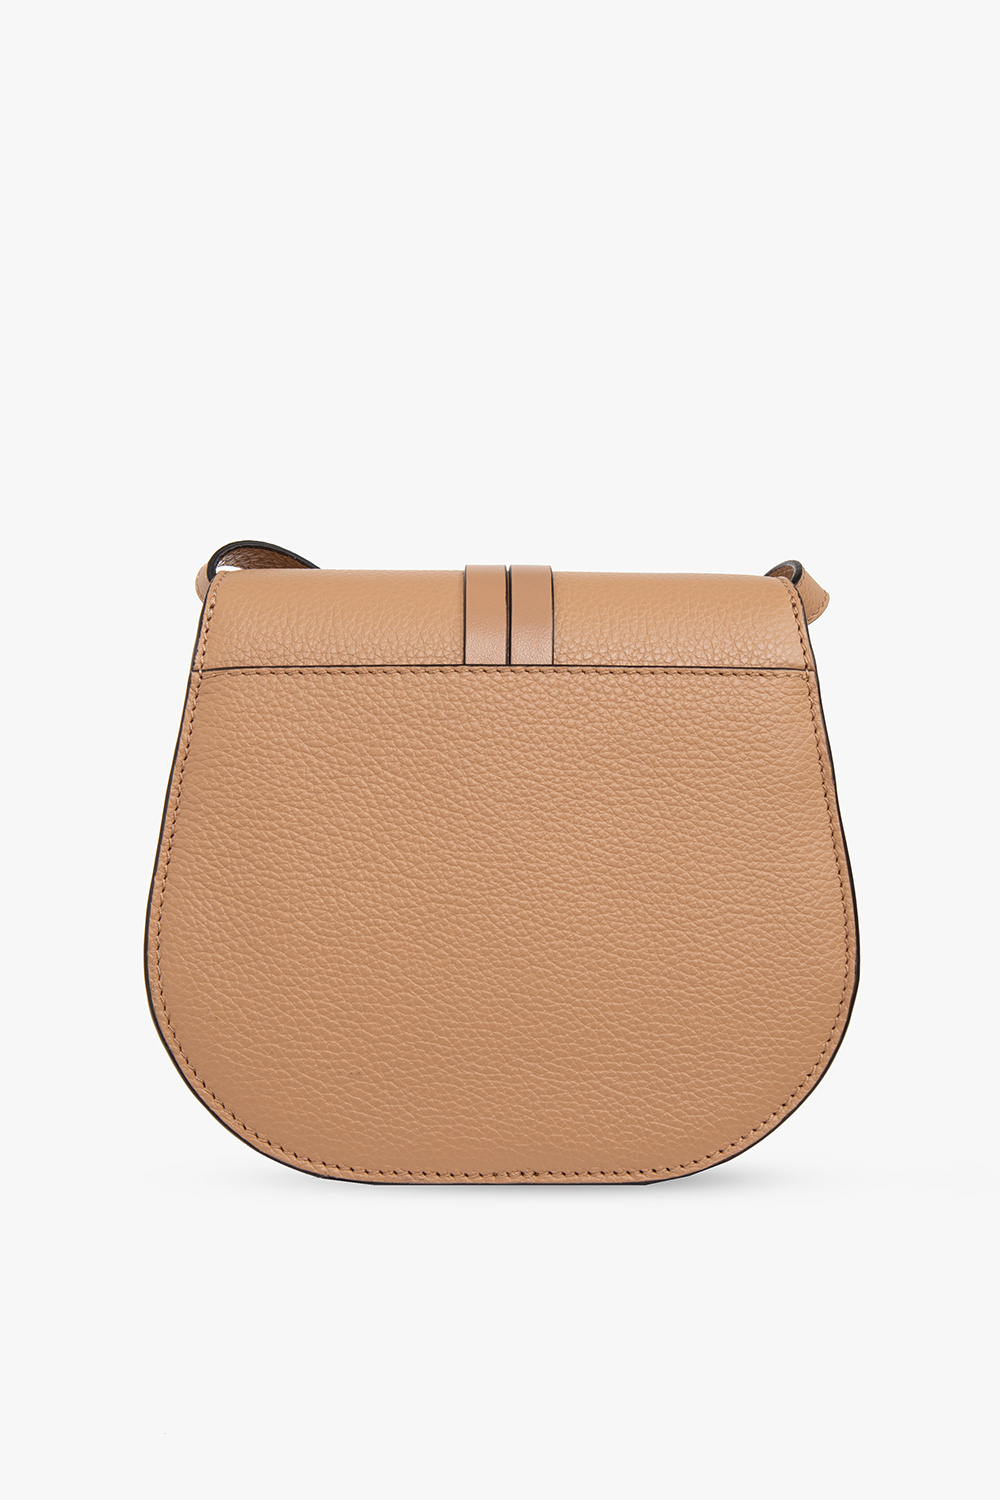 Chloé ‘Alphabet Mini’ shoulder bag